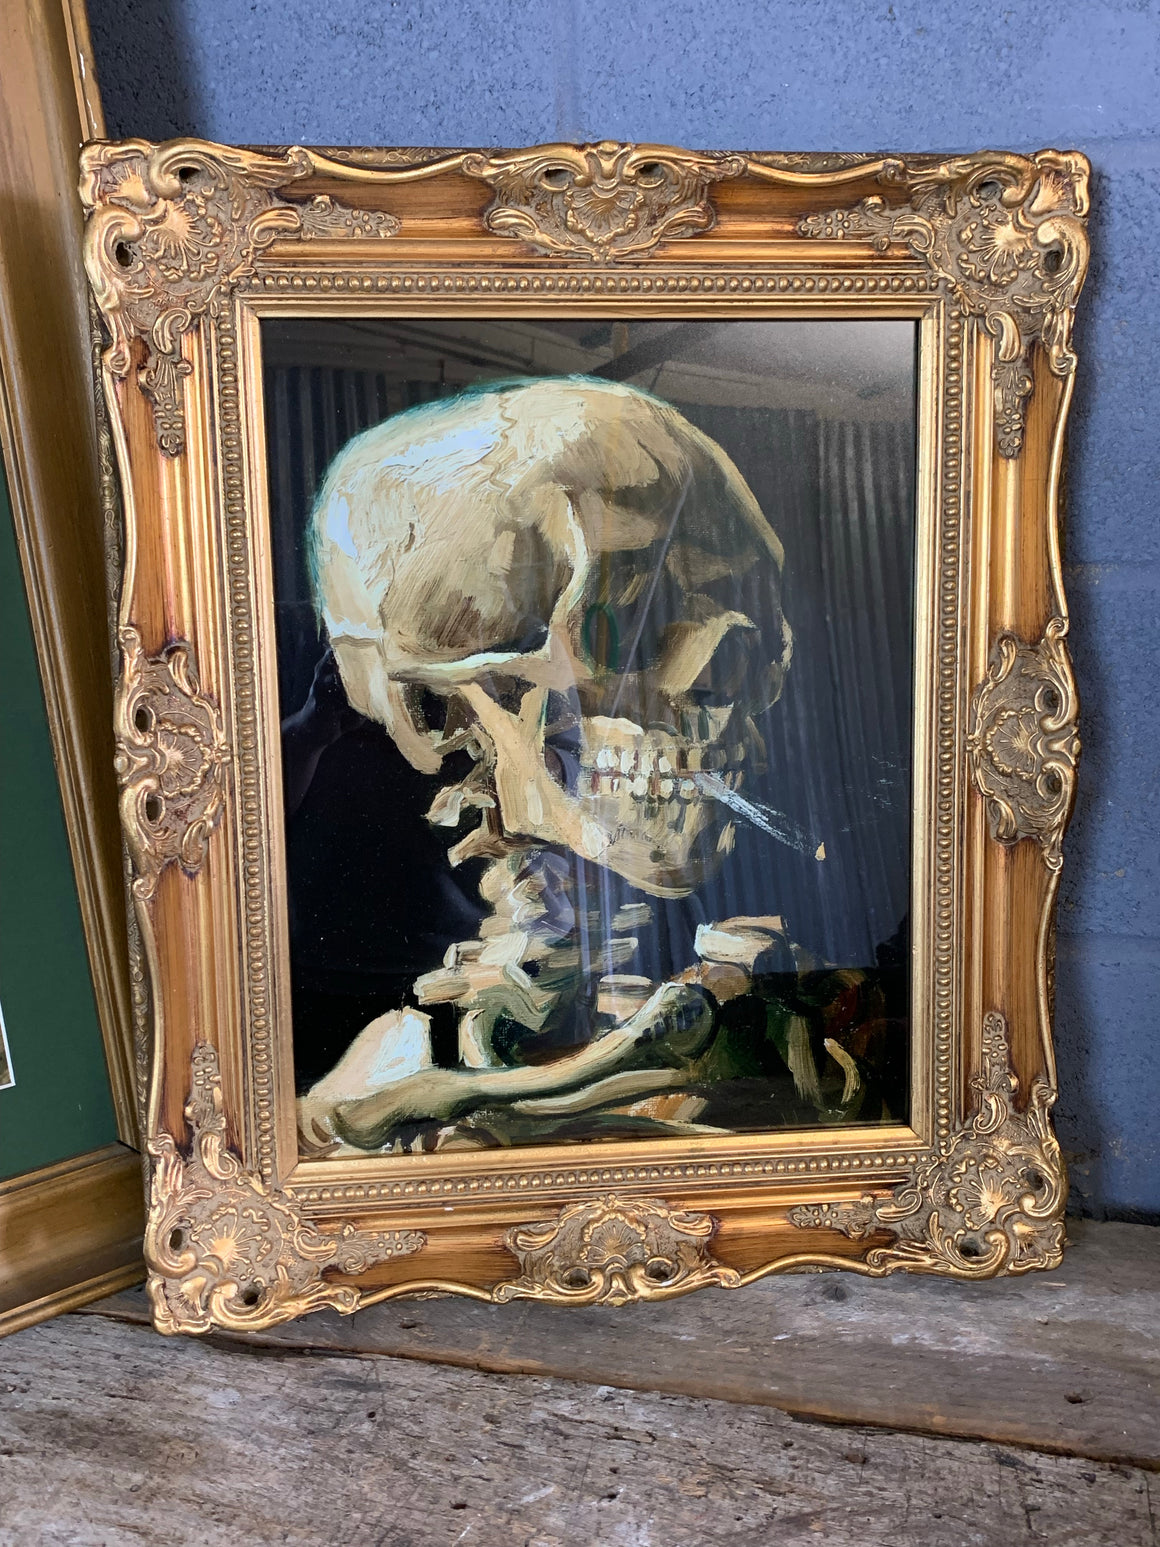 A framed and glazed print of Van Gogh's "Smoking Skeleton" (1885)